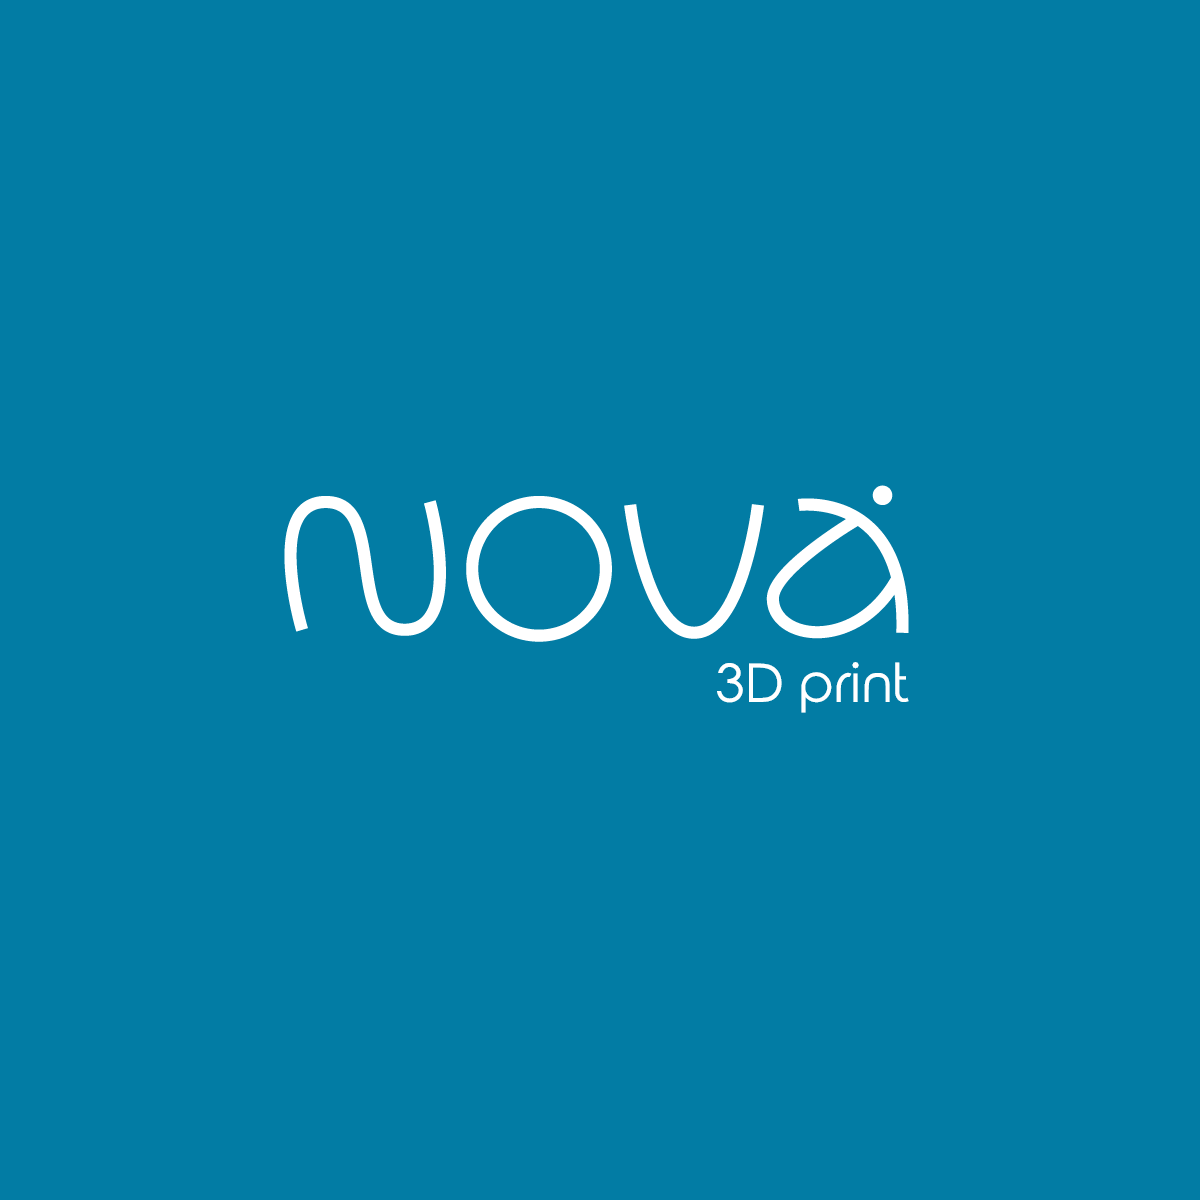 Nova 3D Print, by Rocket Warehouse